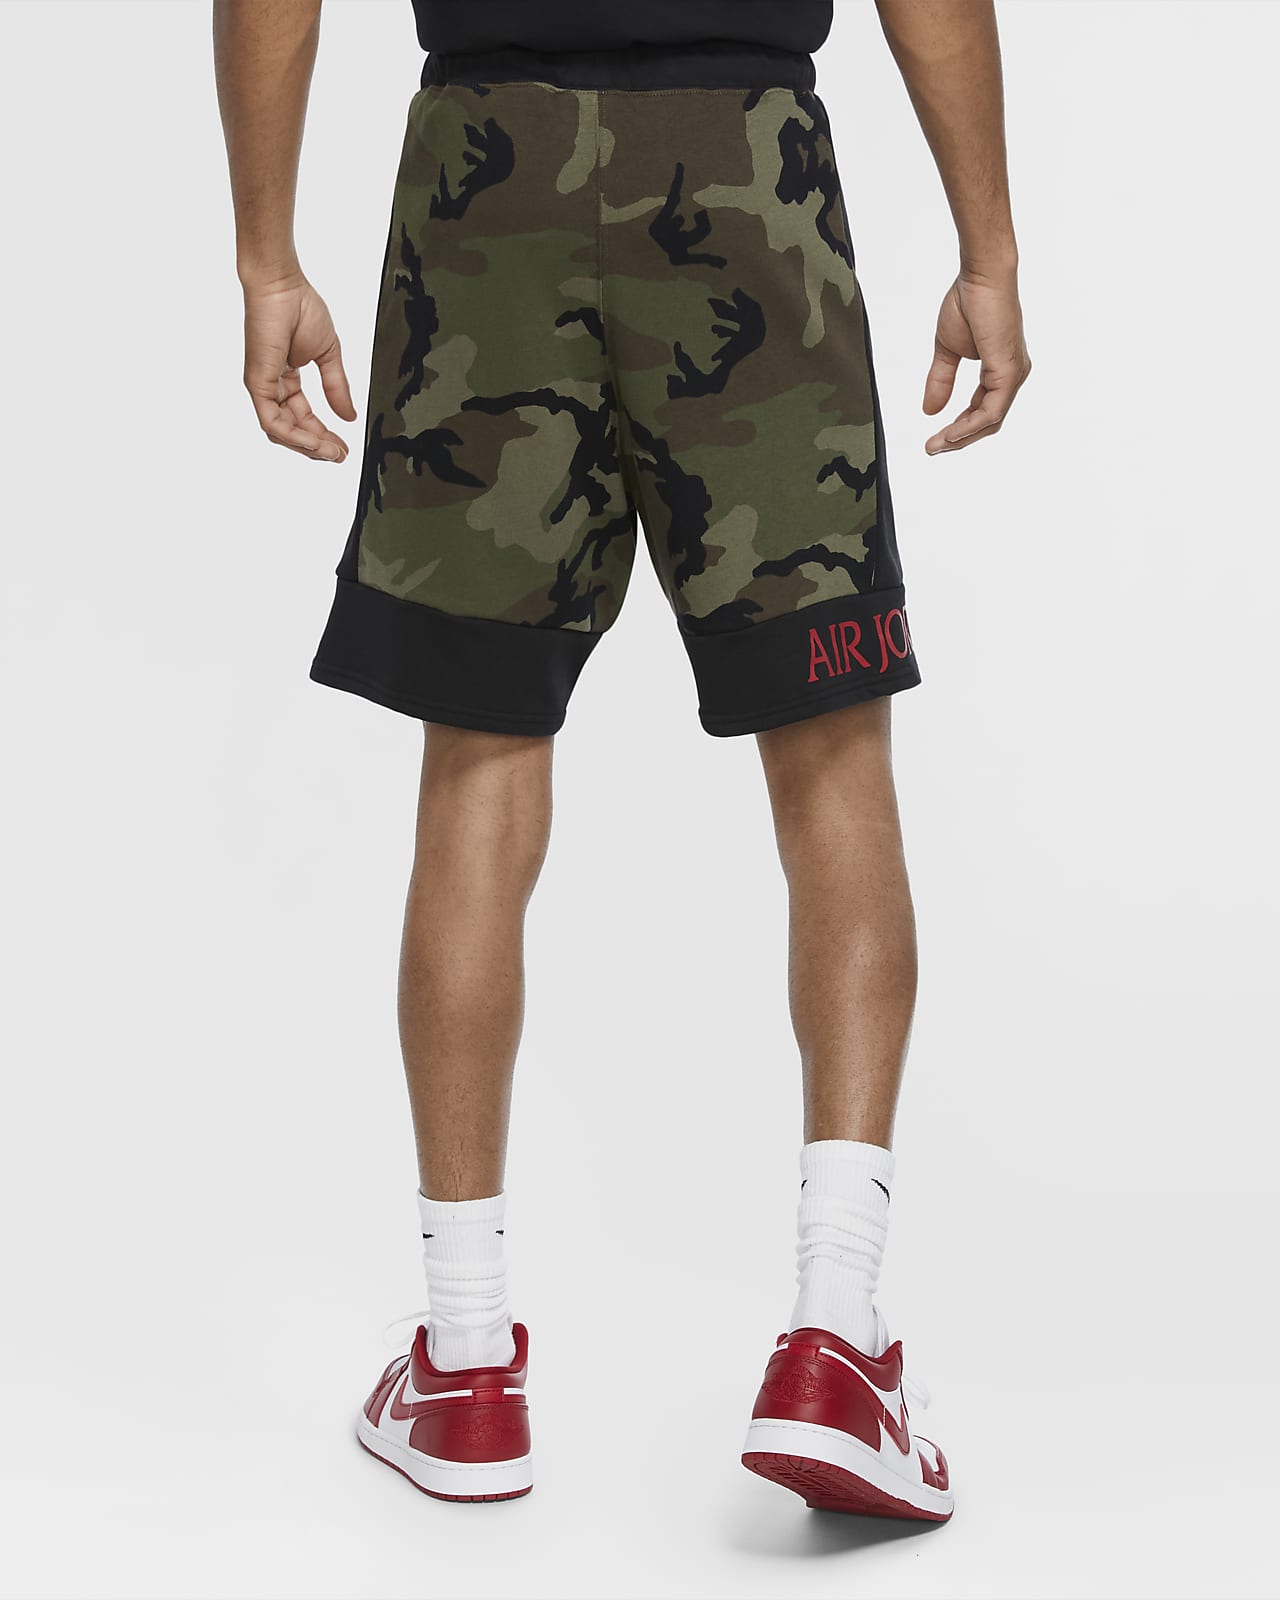 men's camouflage basketball shorts